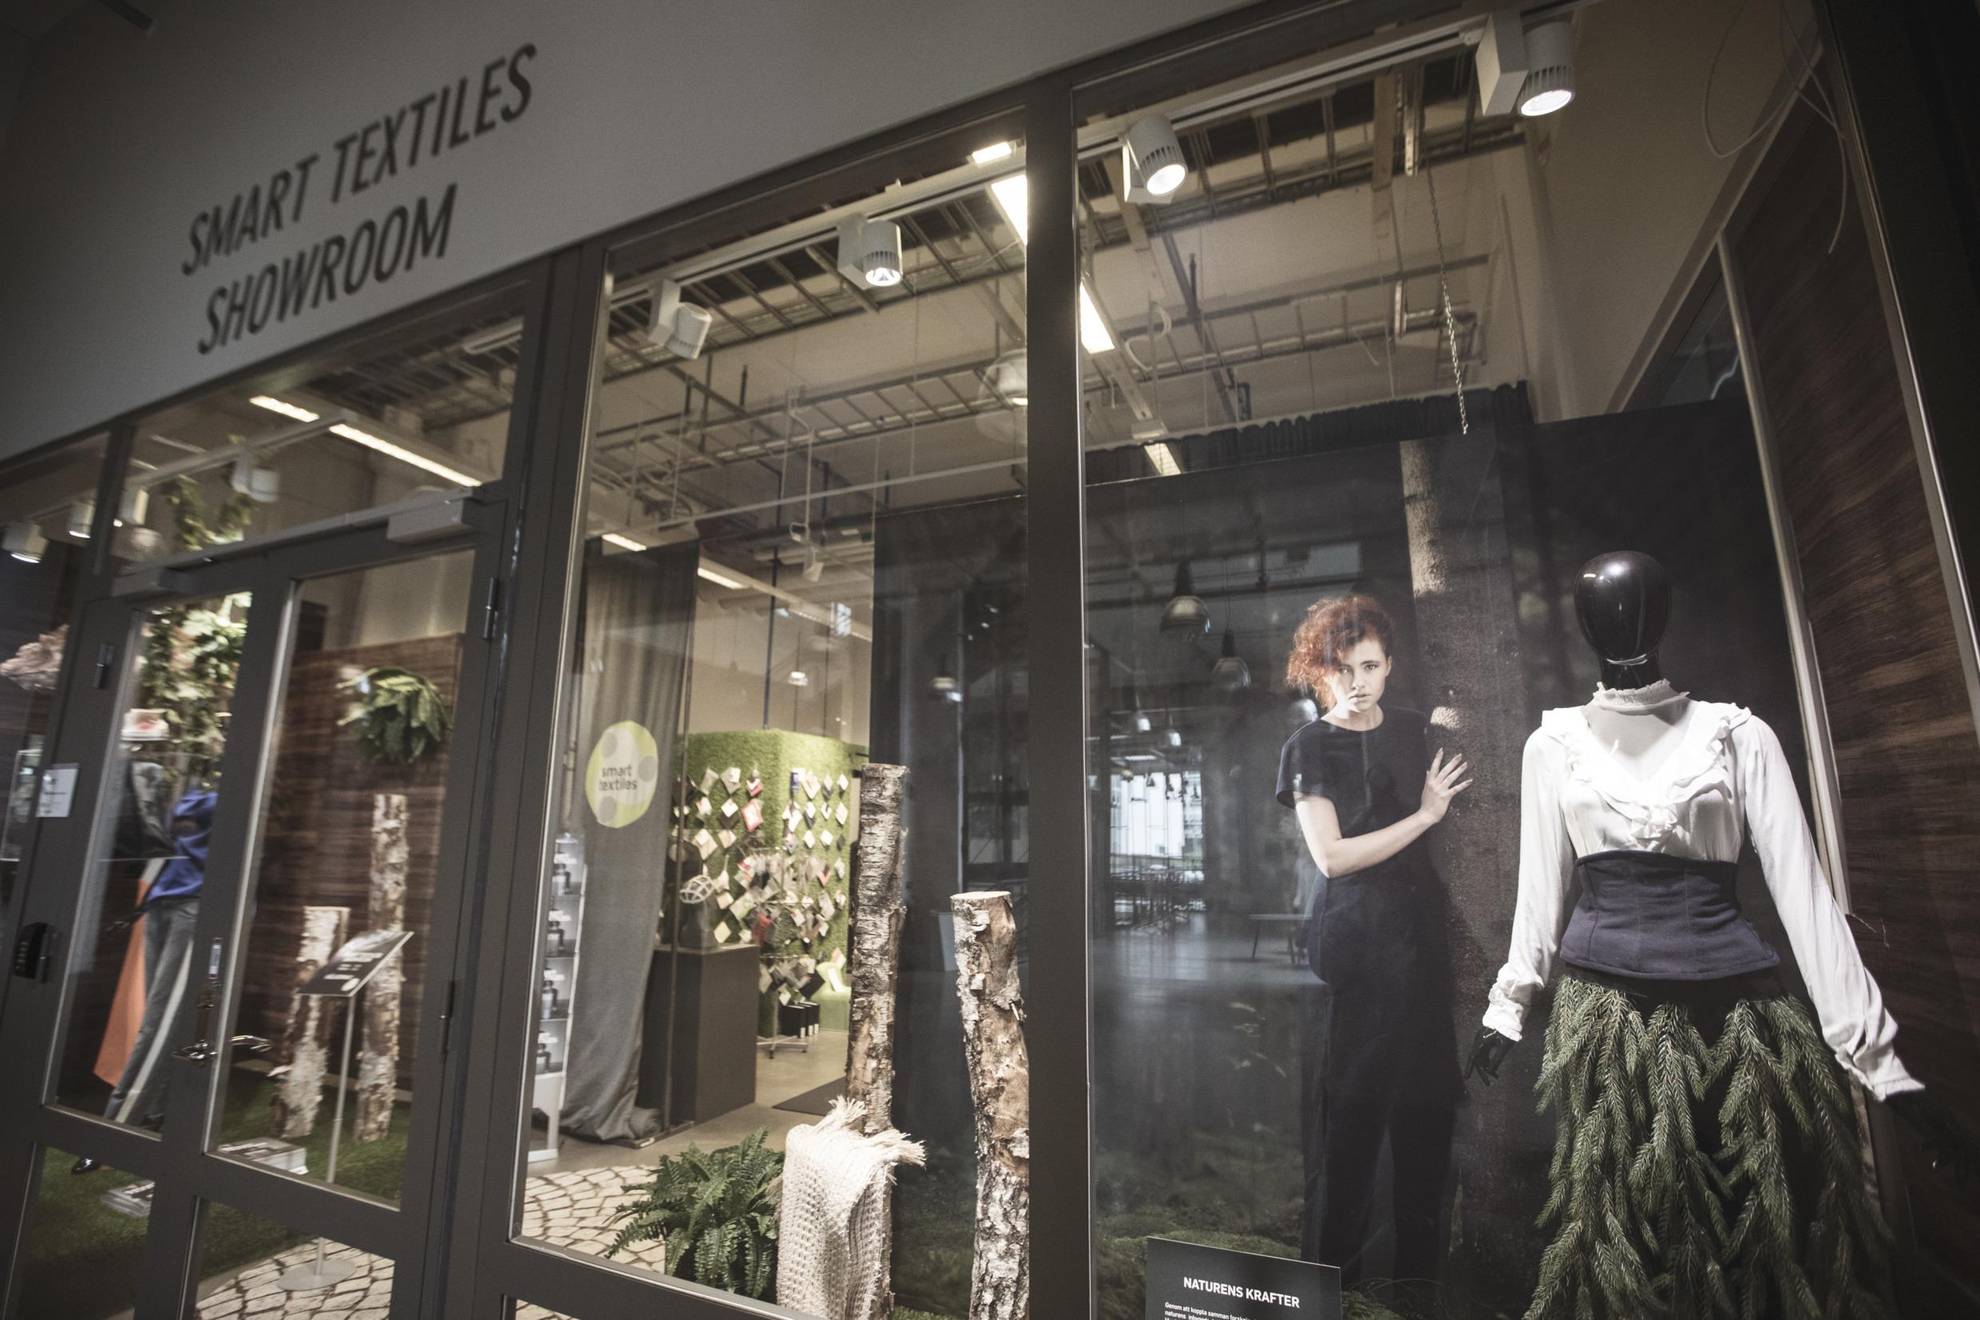 Smart Textiles showroom, Borås